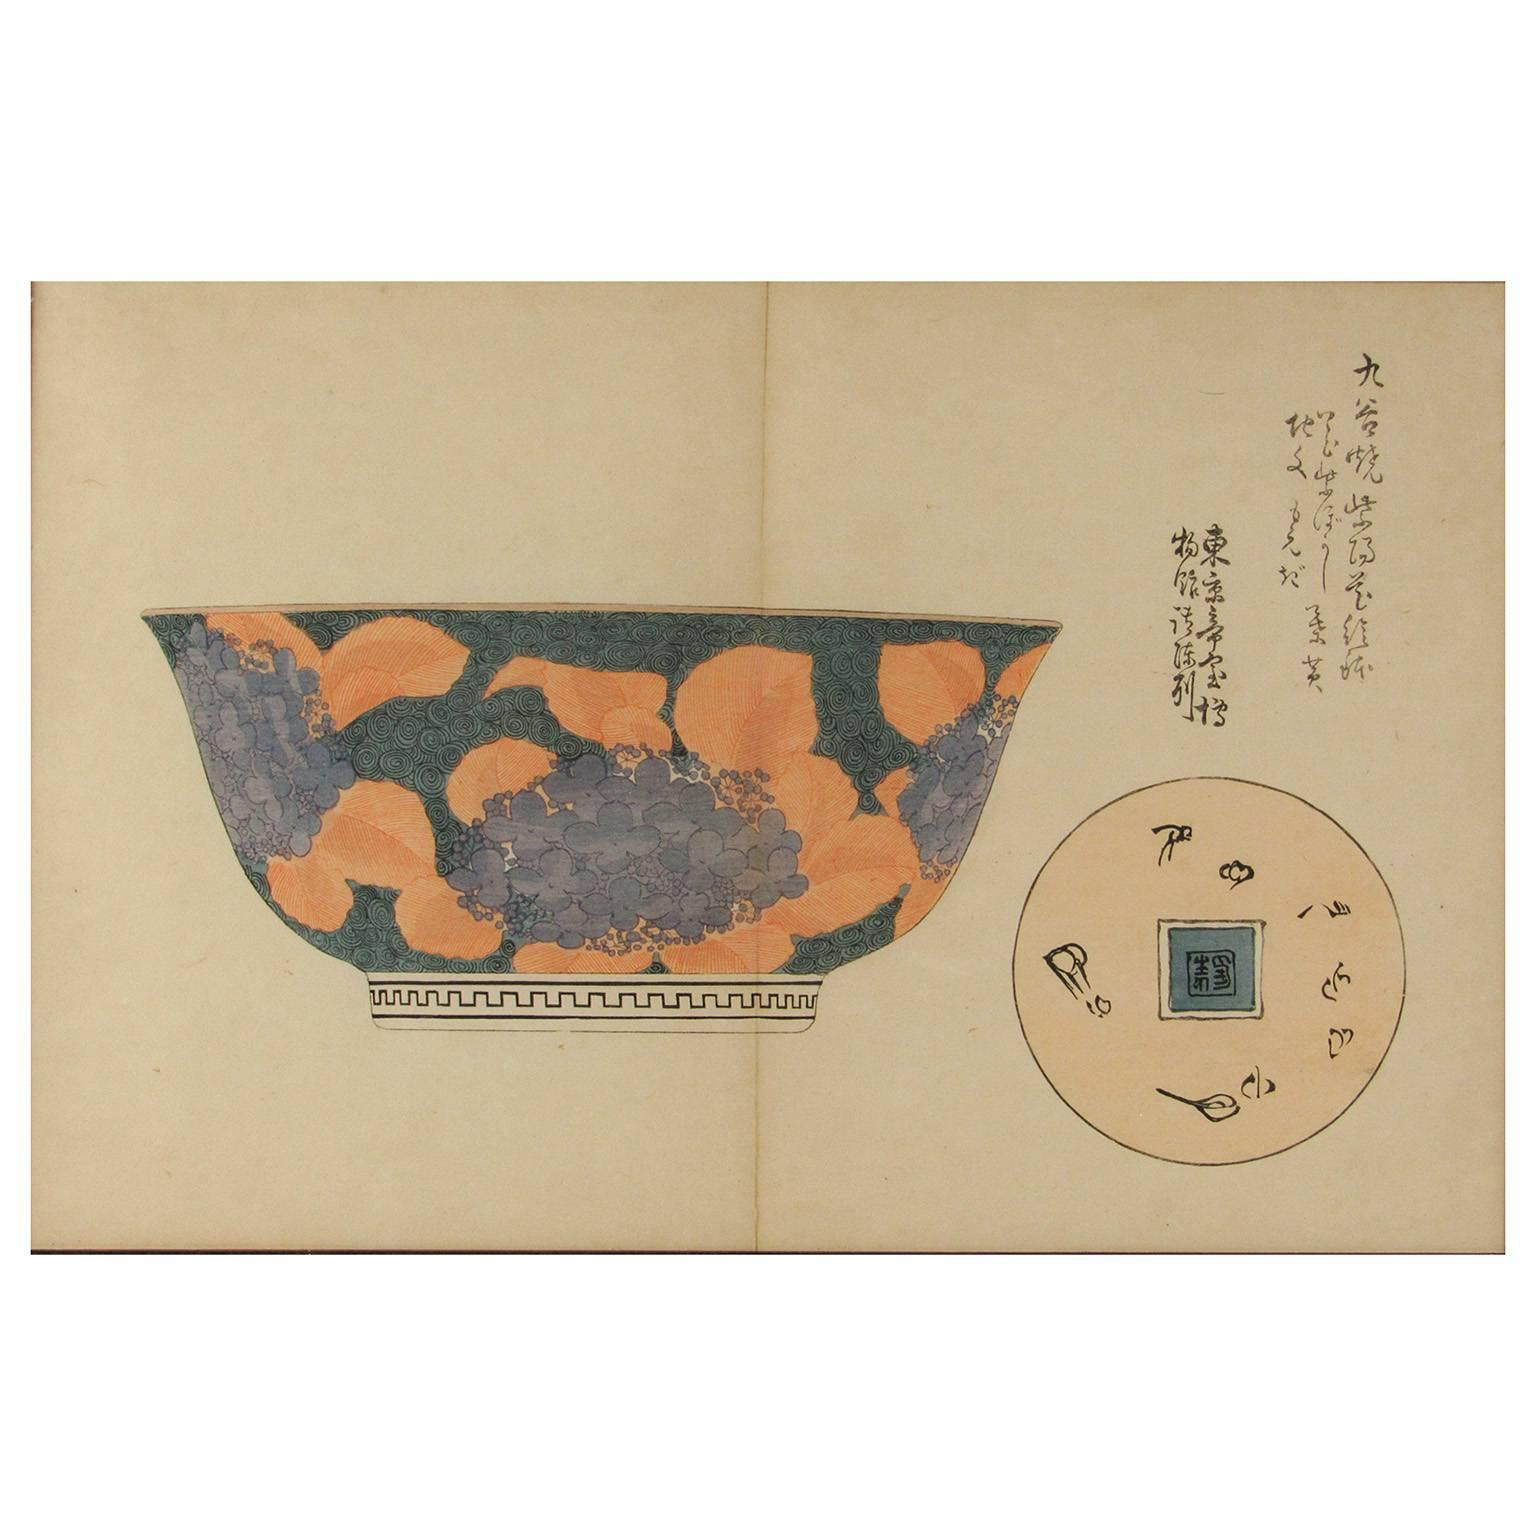 19th Century Set of Two Framed Japanese Woodblock Prints Depicting Porcelain Designs